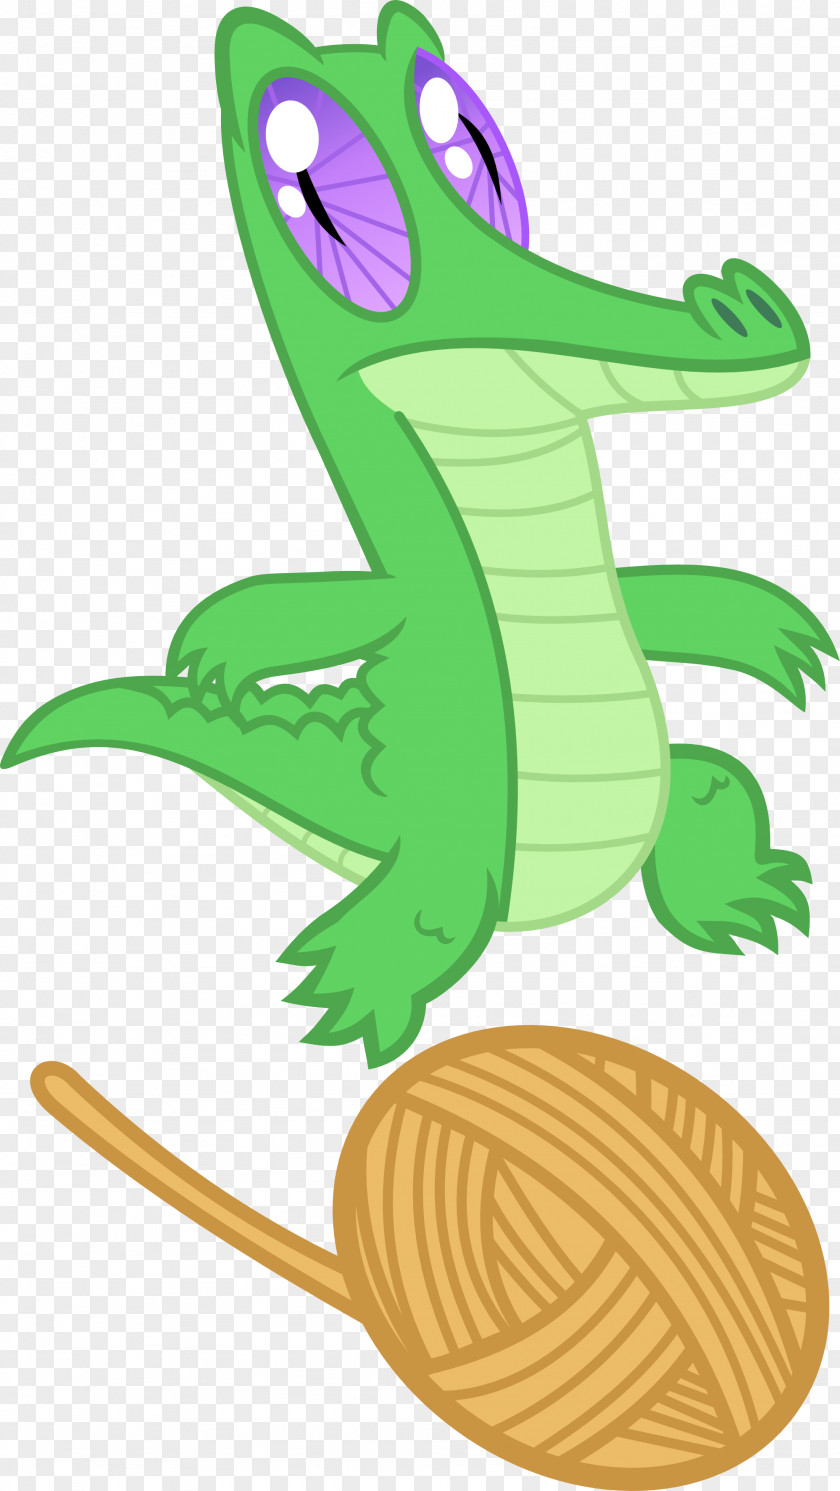 Go Gators Baby Reptile Illustration Clip Art Product Design Amphibians PNG